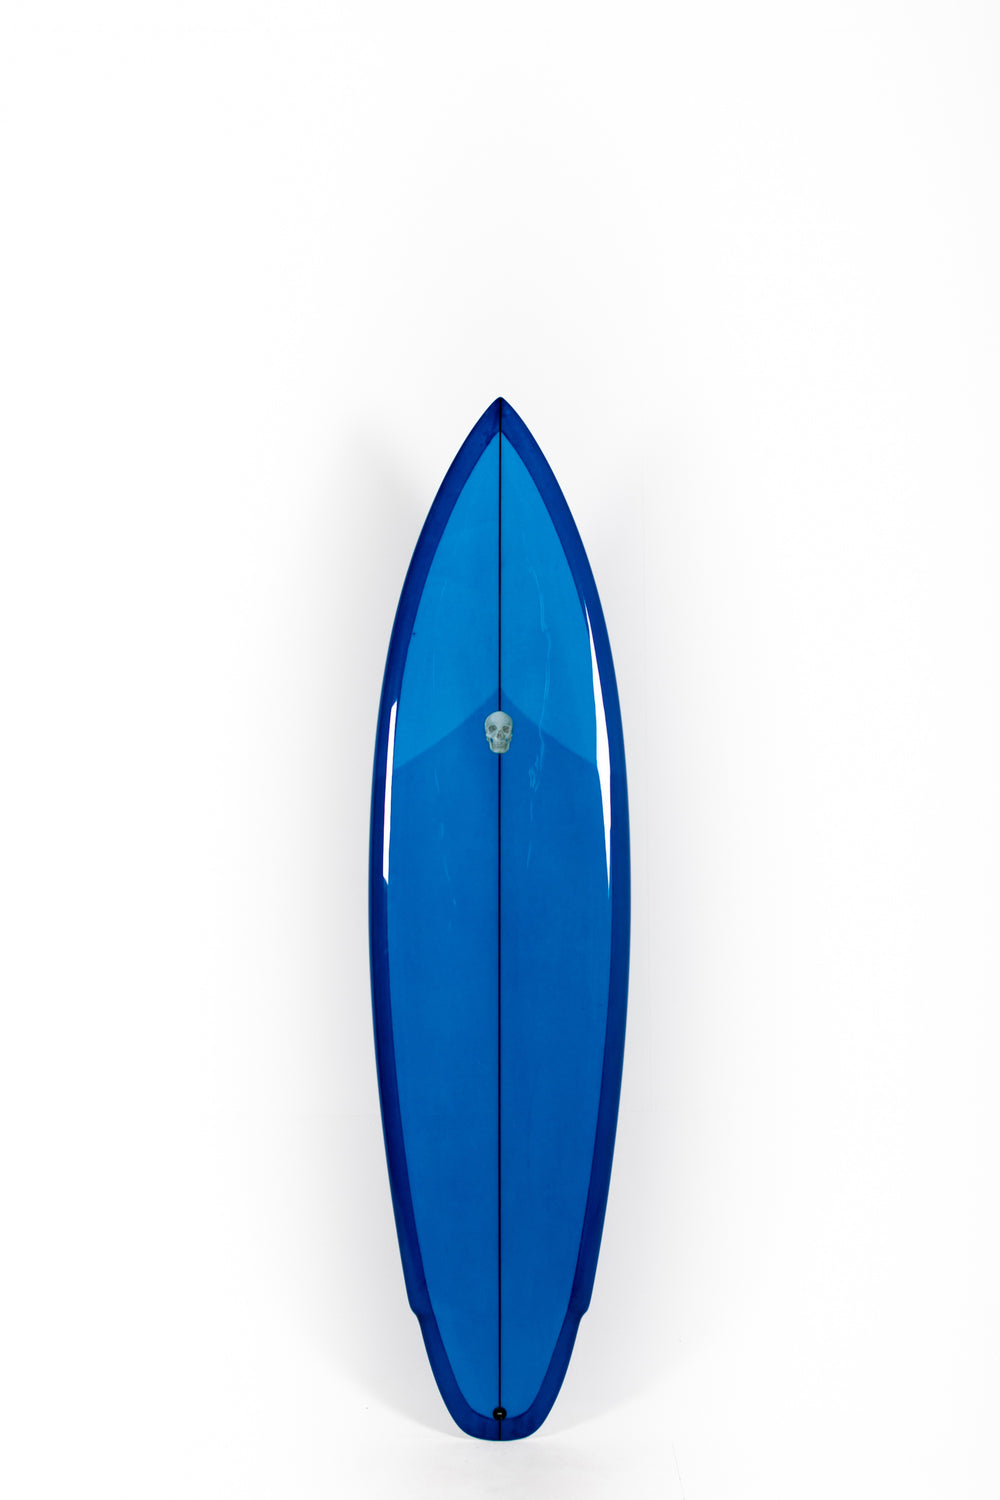 Pukas Surf Shop - Christenson Surfboards - LANE SPLITTER MID- 6'10